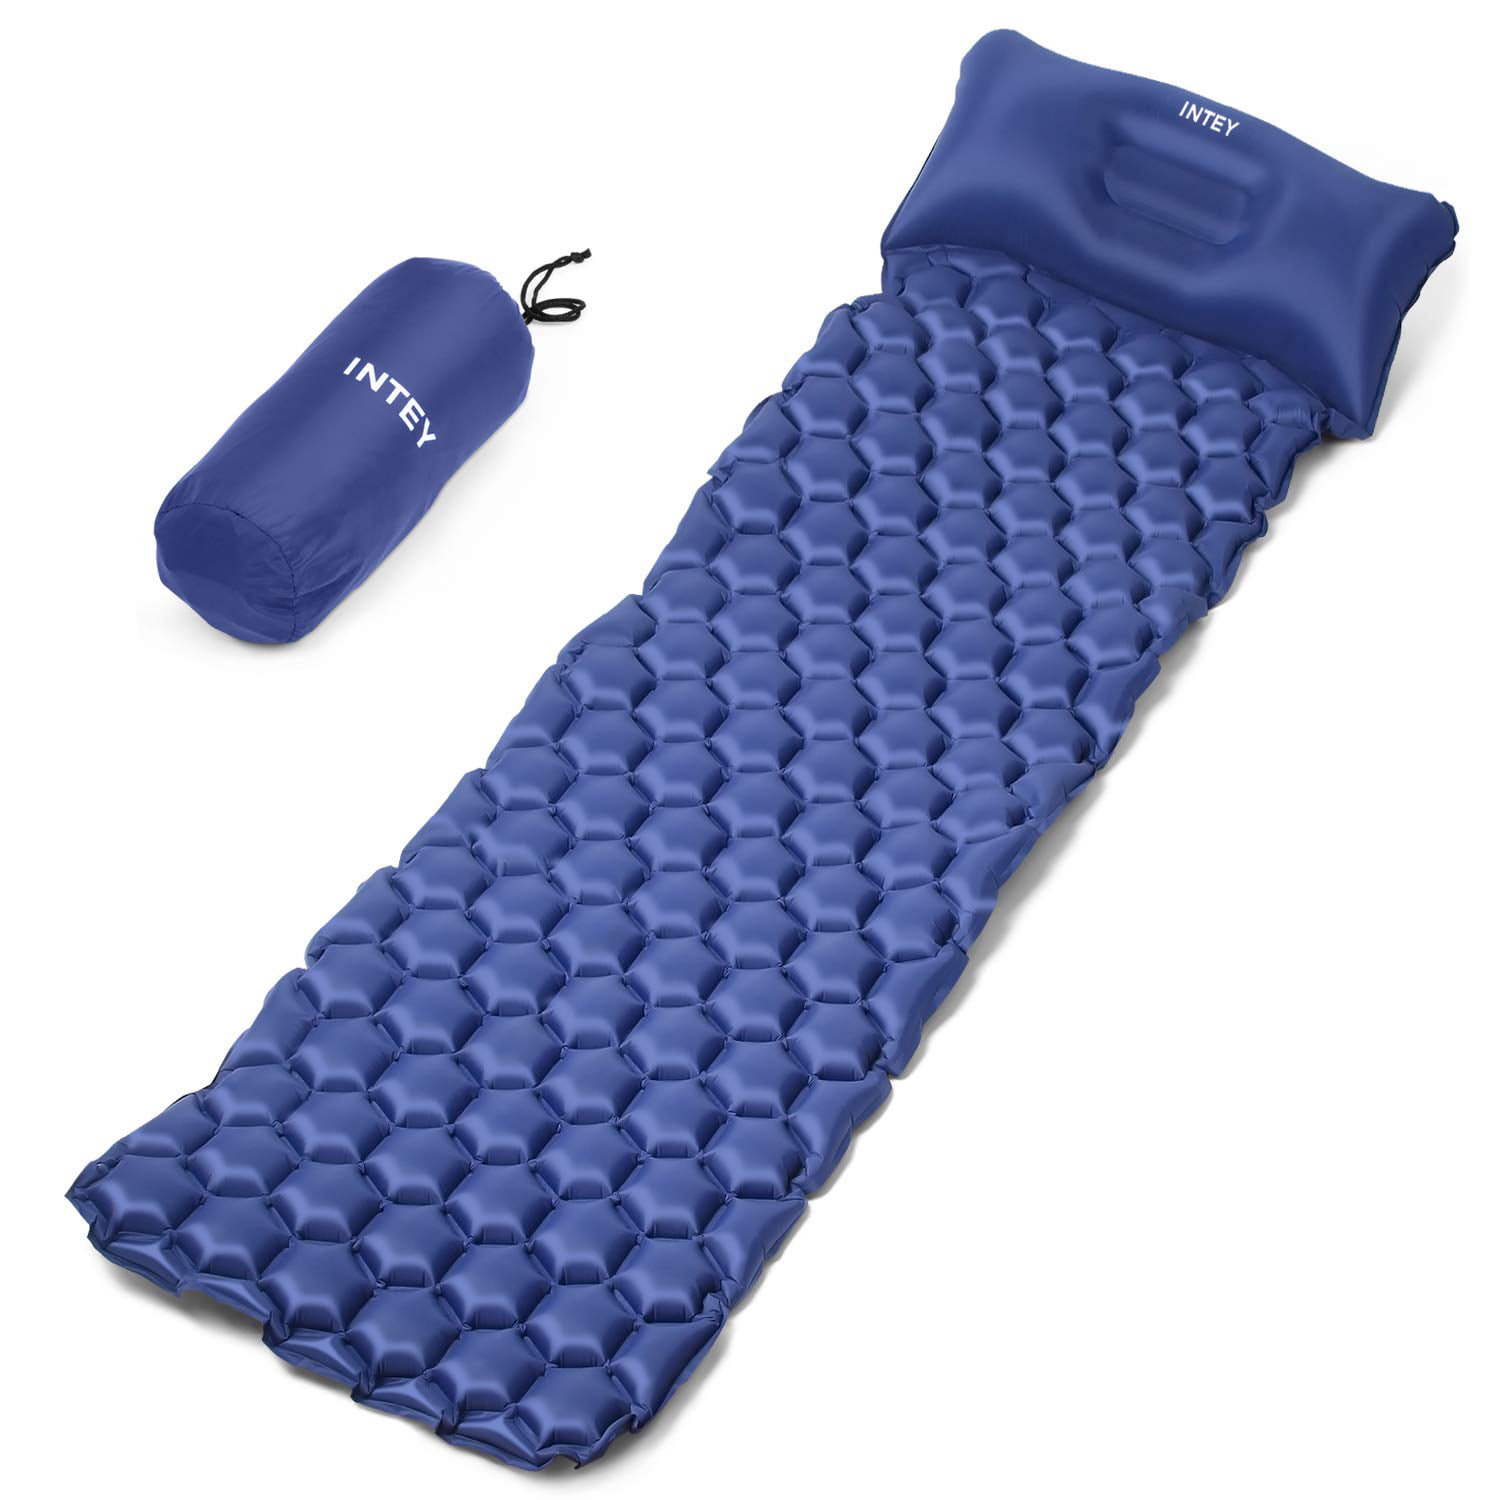 Inflatable Compact Camping Sleeping Pad Hiking Air Mattress Blue w/ Pillow 